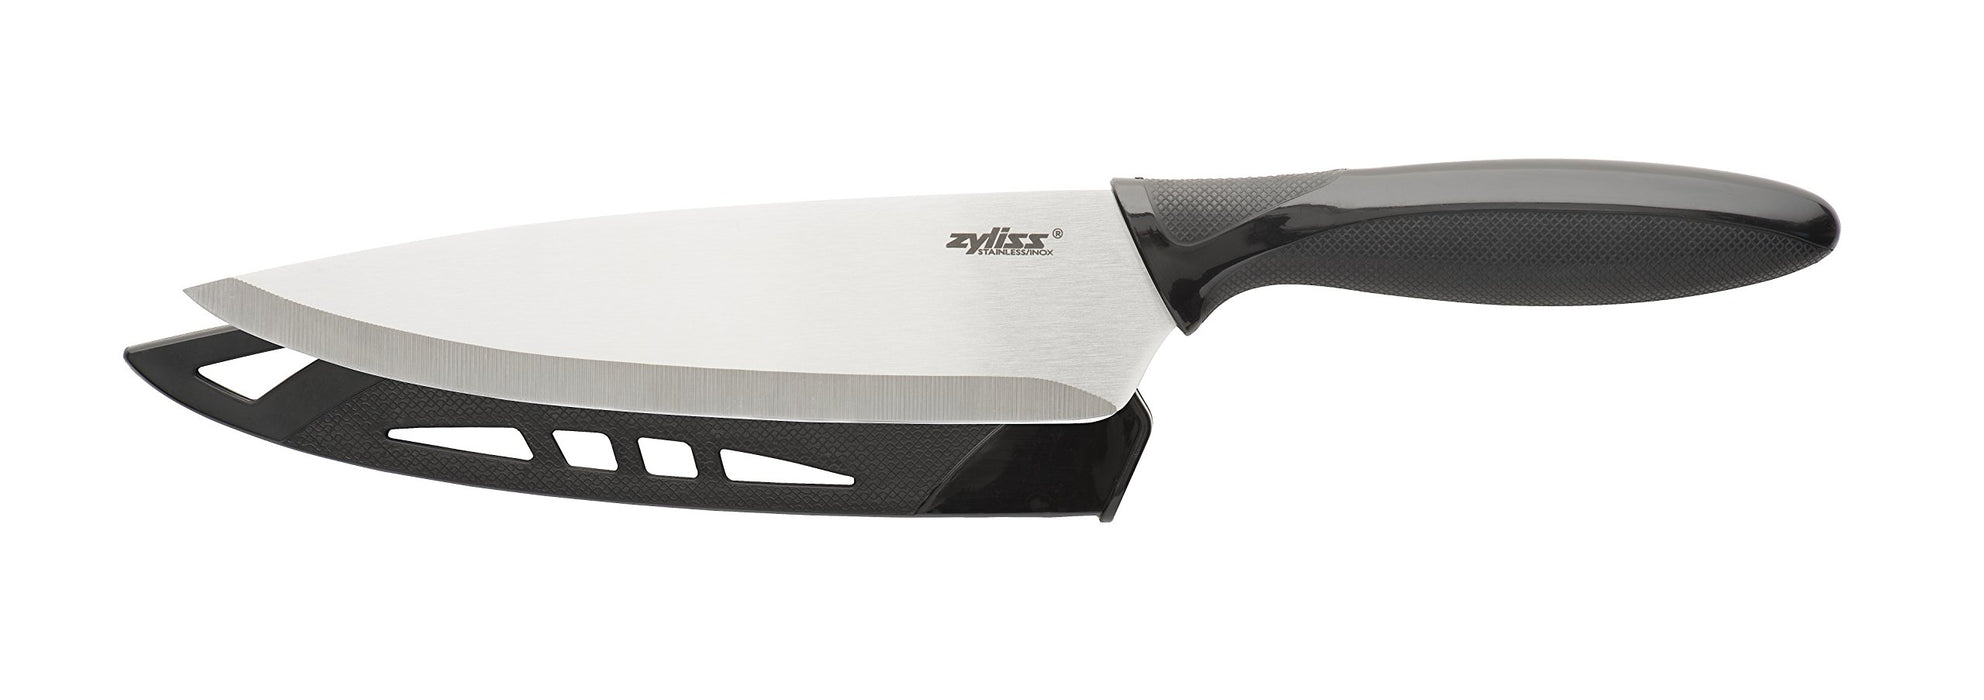 Zyliss E920240 Comfort 3 Piece Knife Set, Multiple Sizes